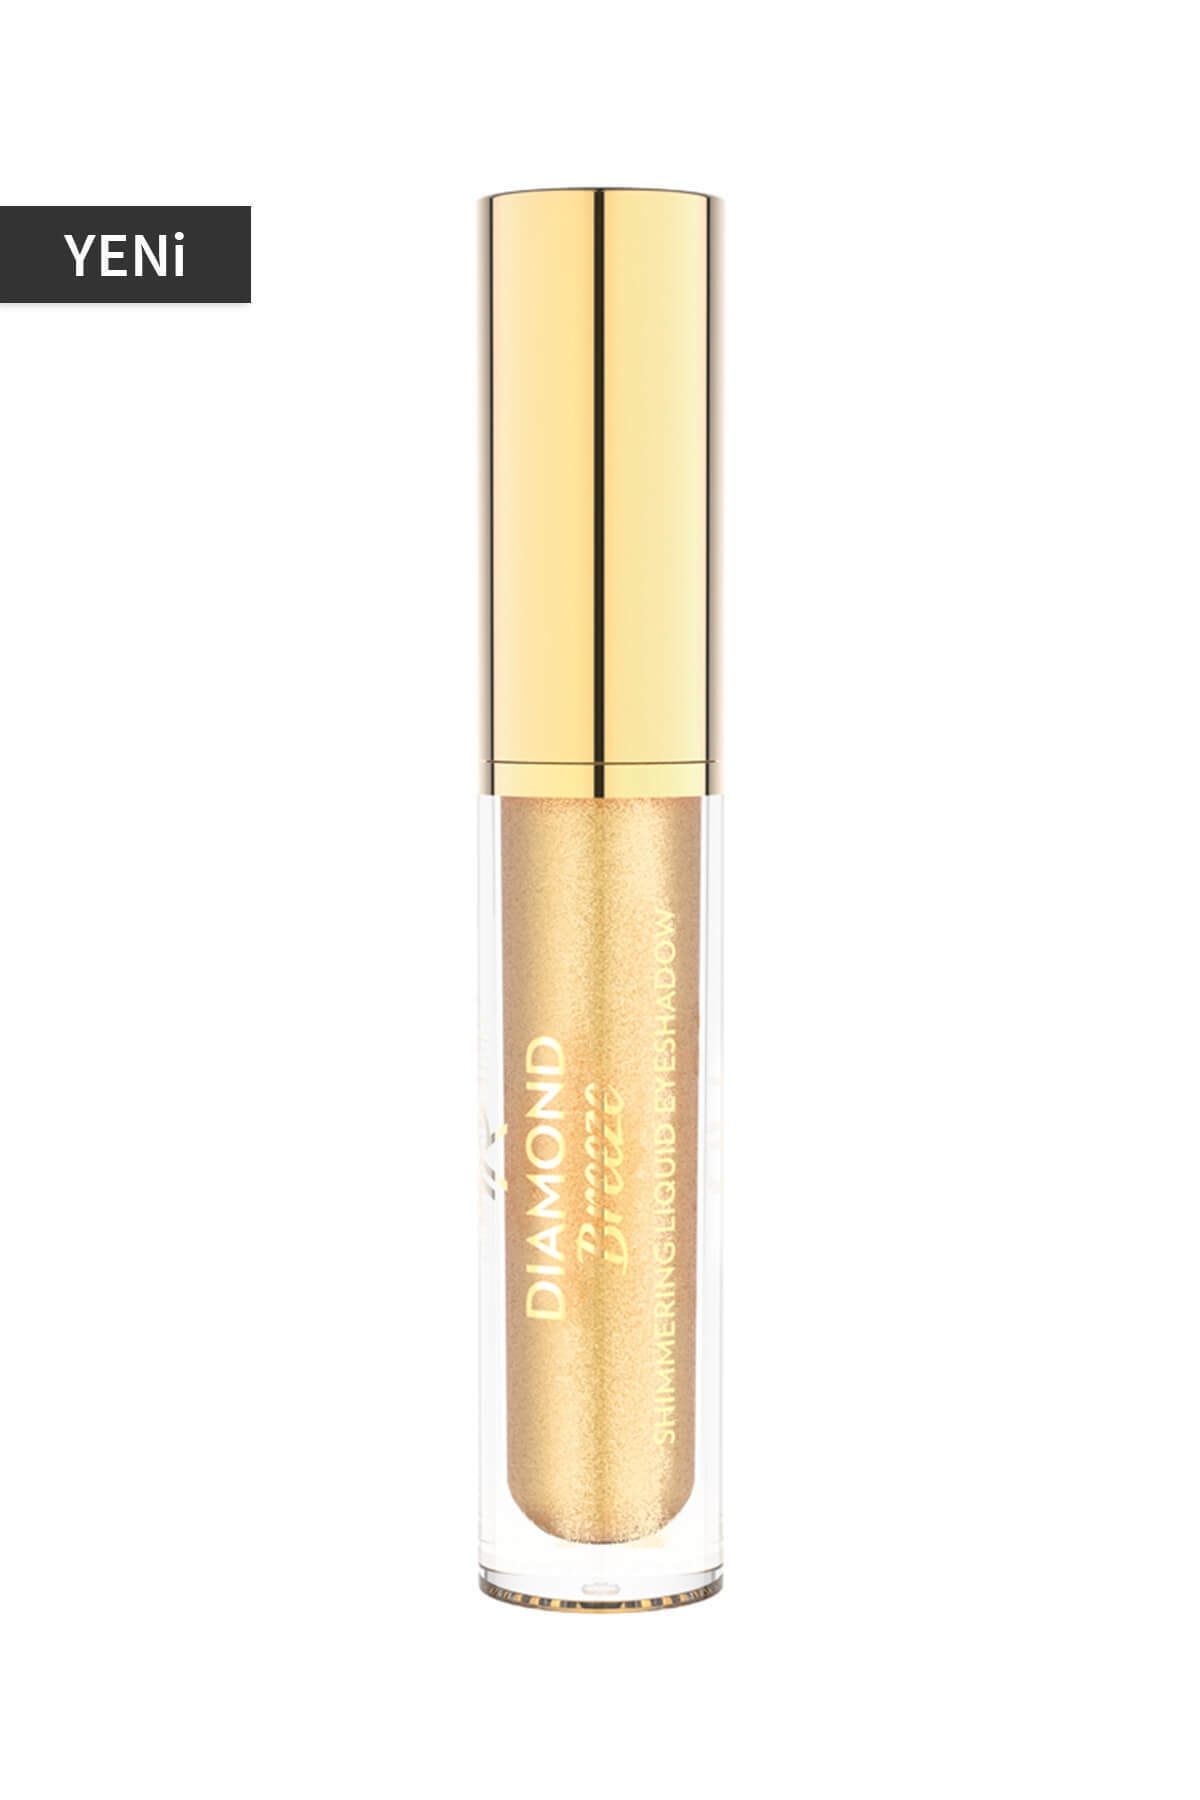 Golden Rose Likit Göz Farı - Diamond Breeze Shimmering Liquid Eyeshadow 01 24K Gold 8691190965624